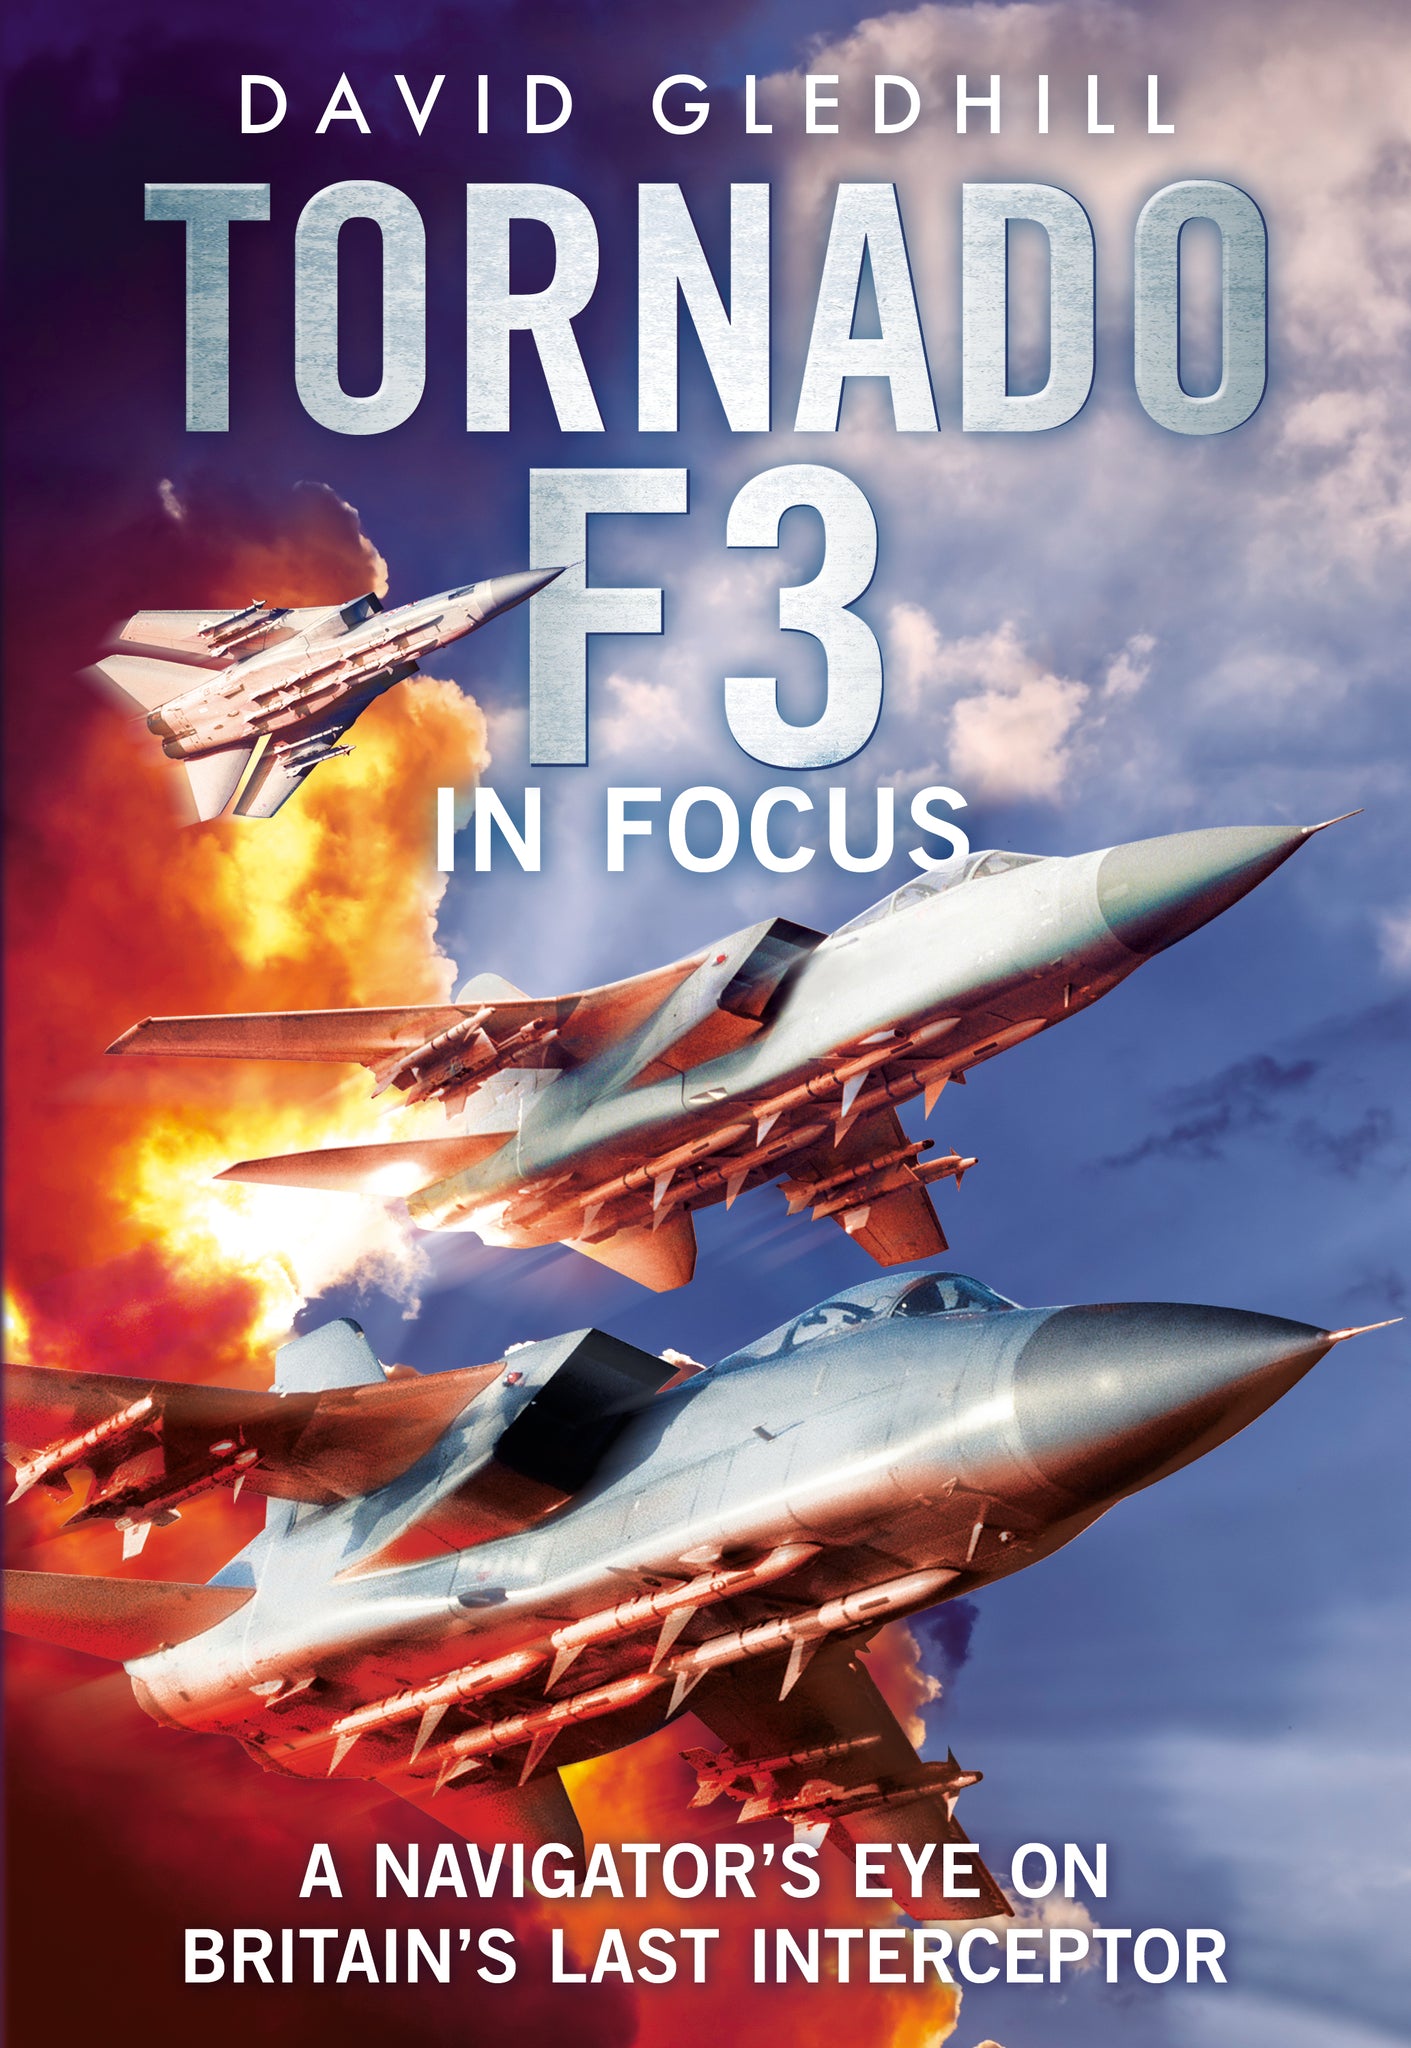 Tornado F3 in Focus: A Navigator's Eye on Britain's Last Interceptor